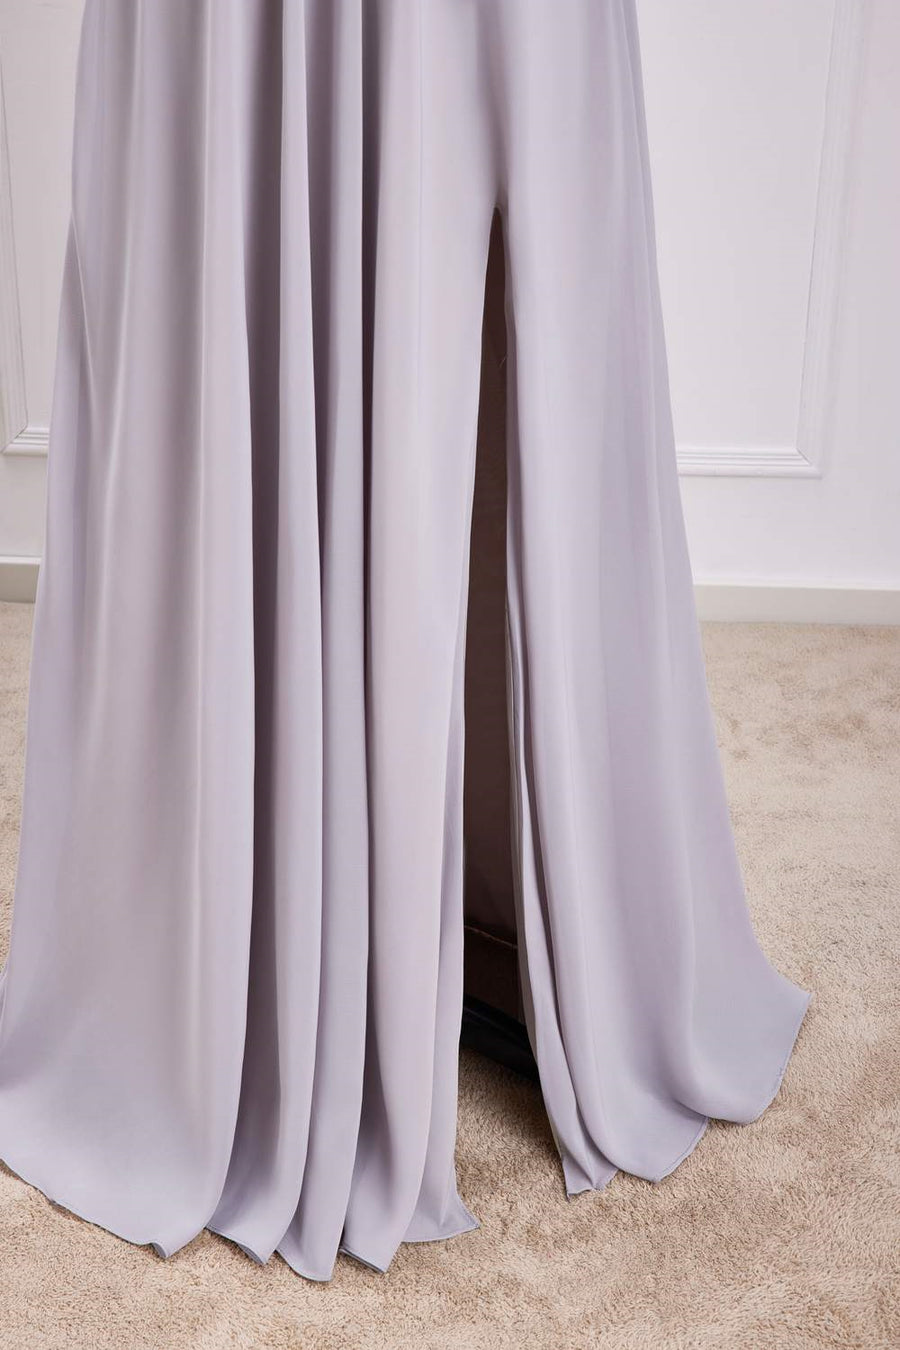 Grey Off-Shoulder A-line Chiffon Long Bridesmaid Dress with Slit